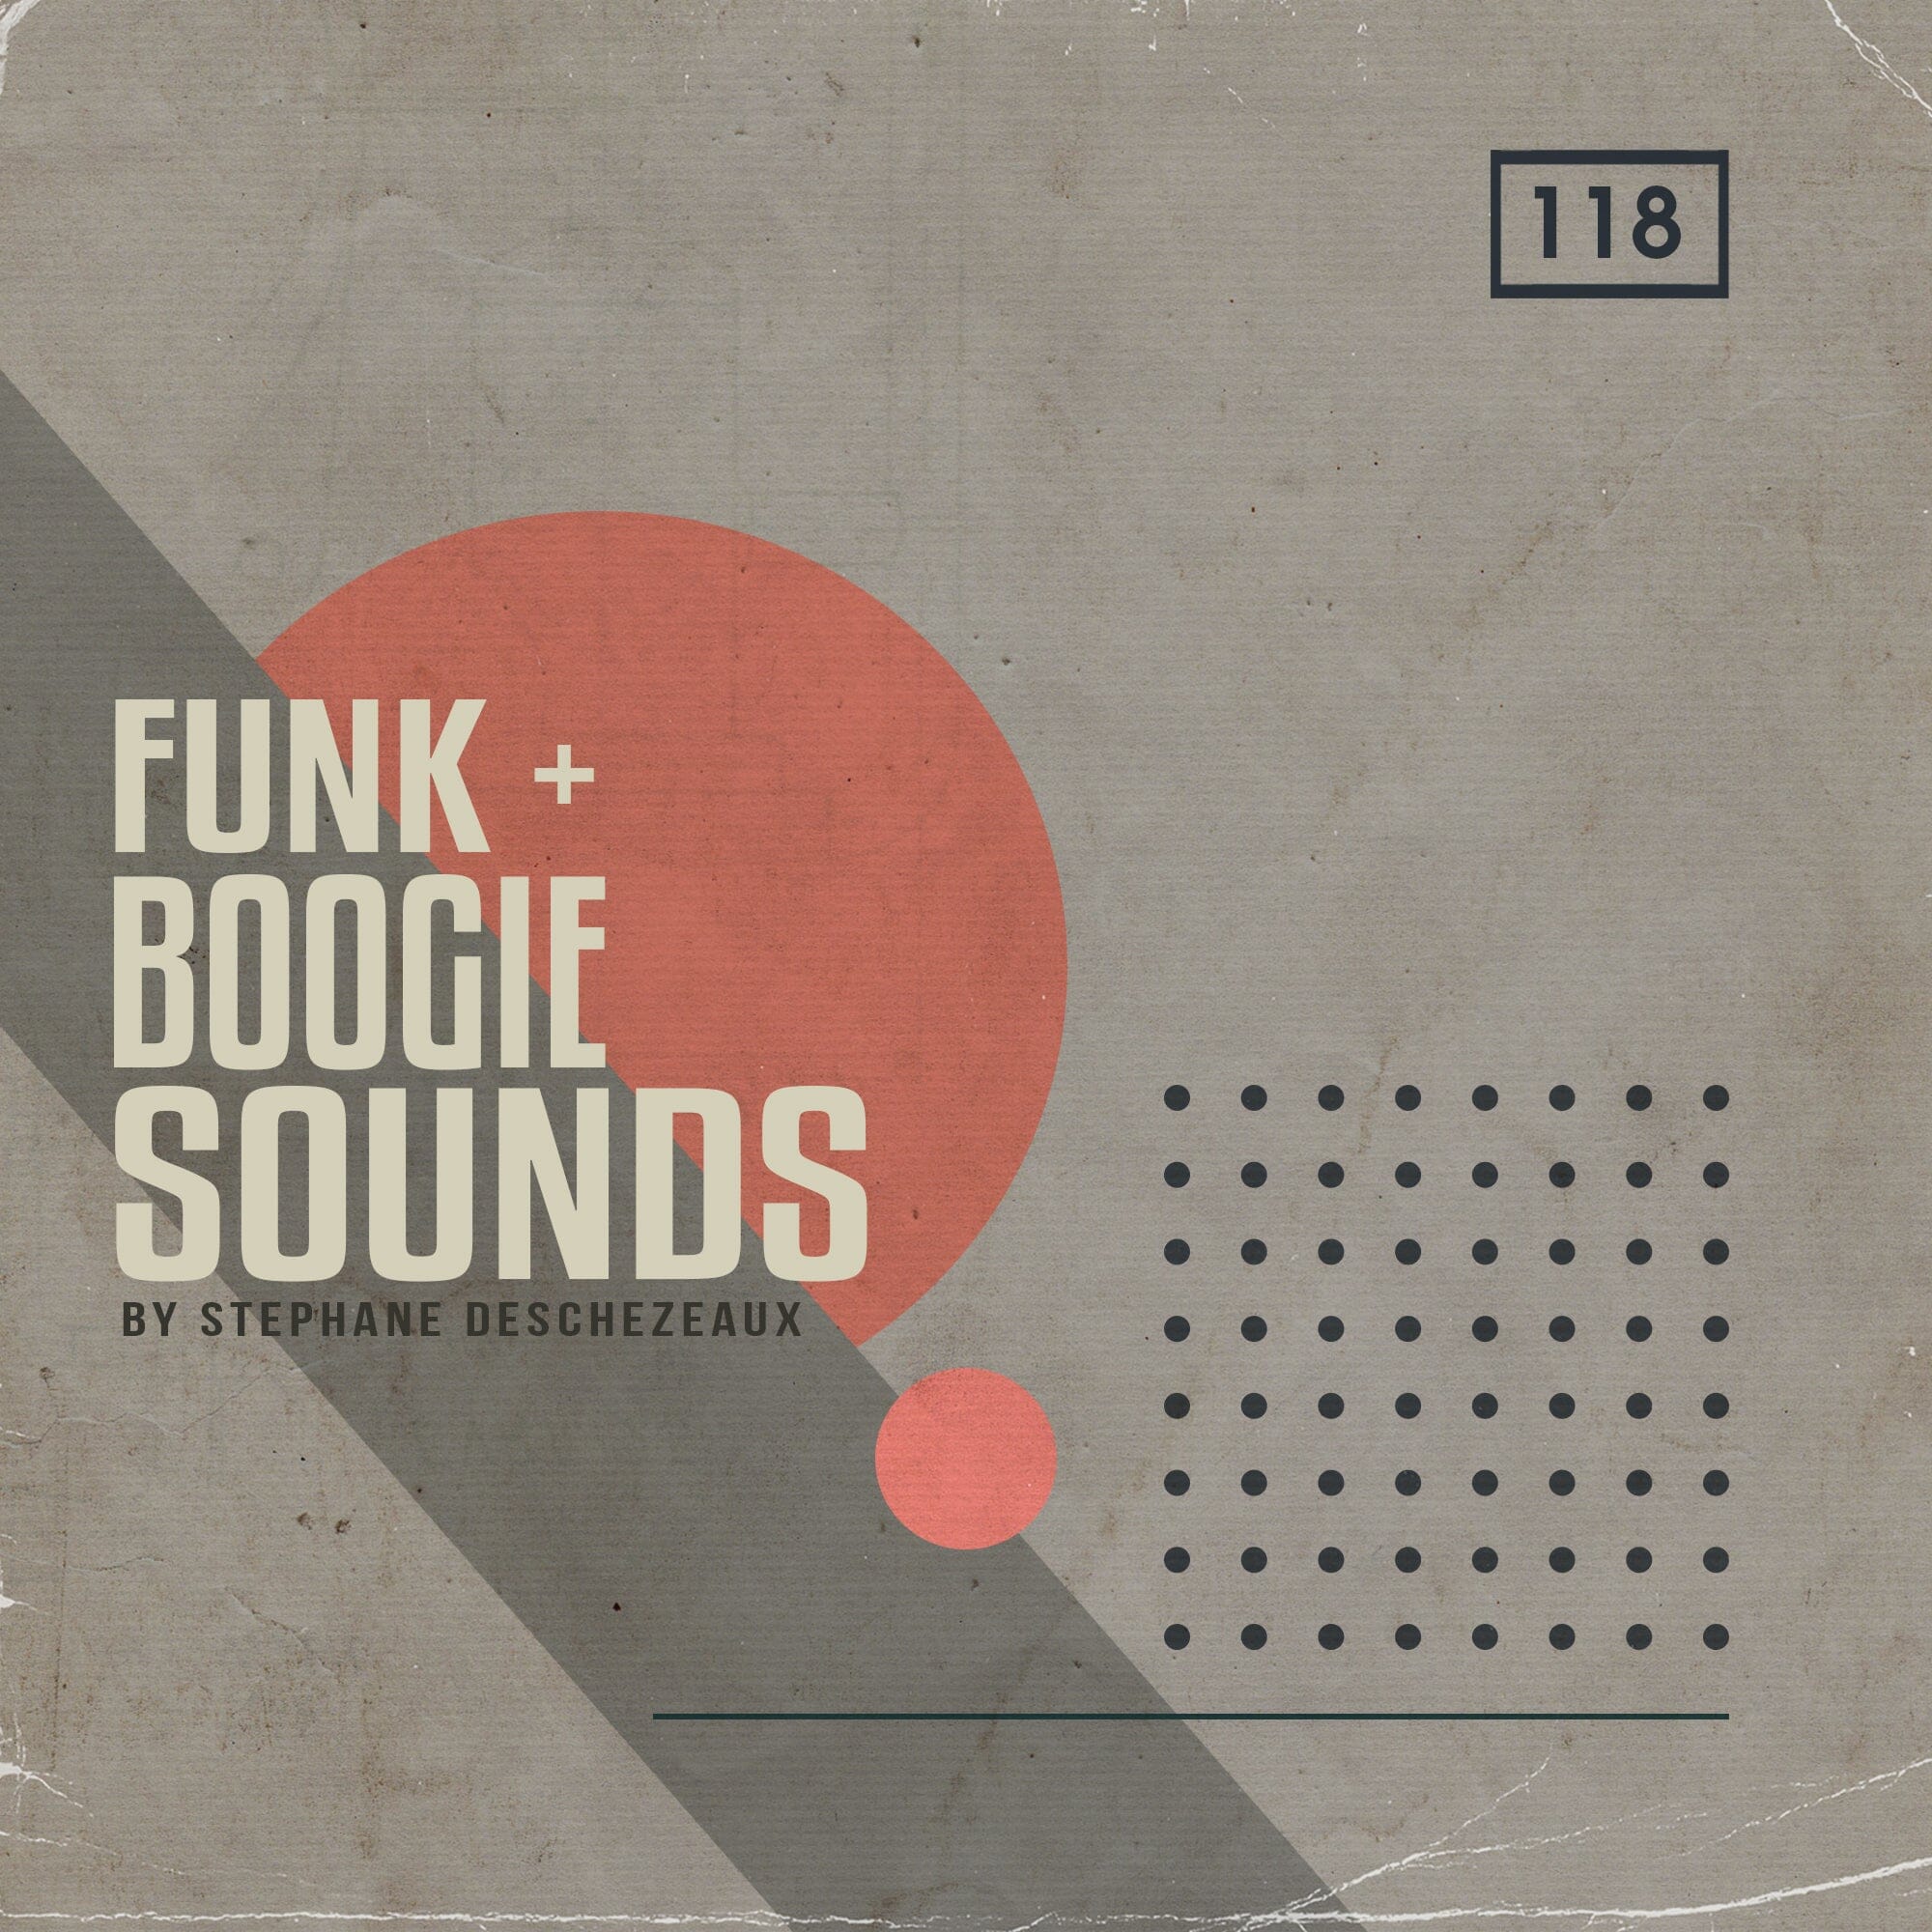 Funk and Boogie Sounds by Stephane Deschezeaux - Funk Sample Pack (WAV Rex2 Files) Sample Pack Bingoshakerz